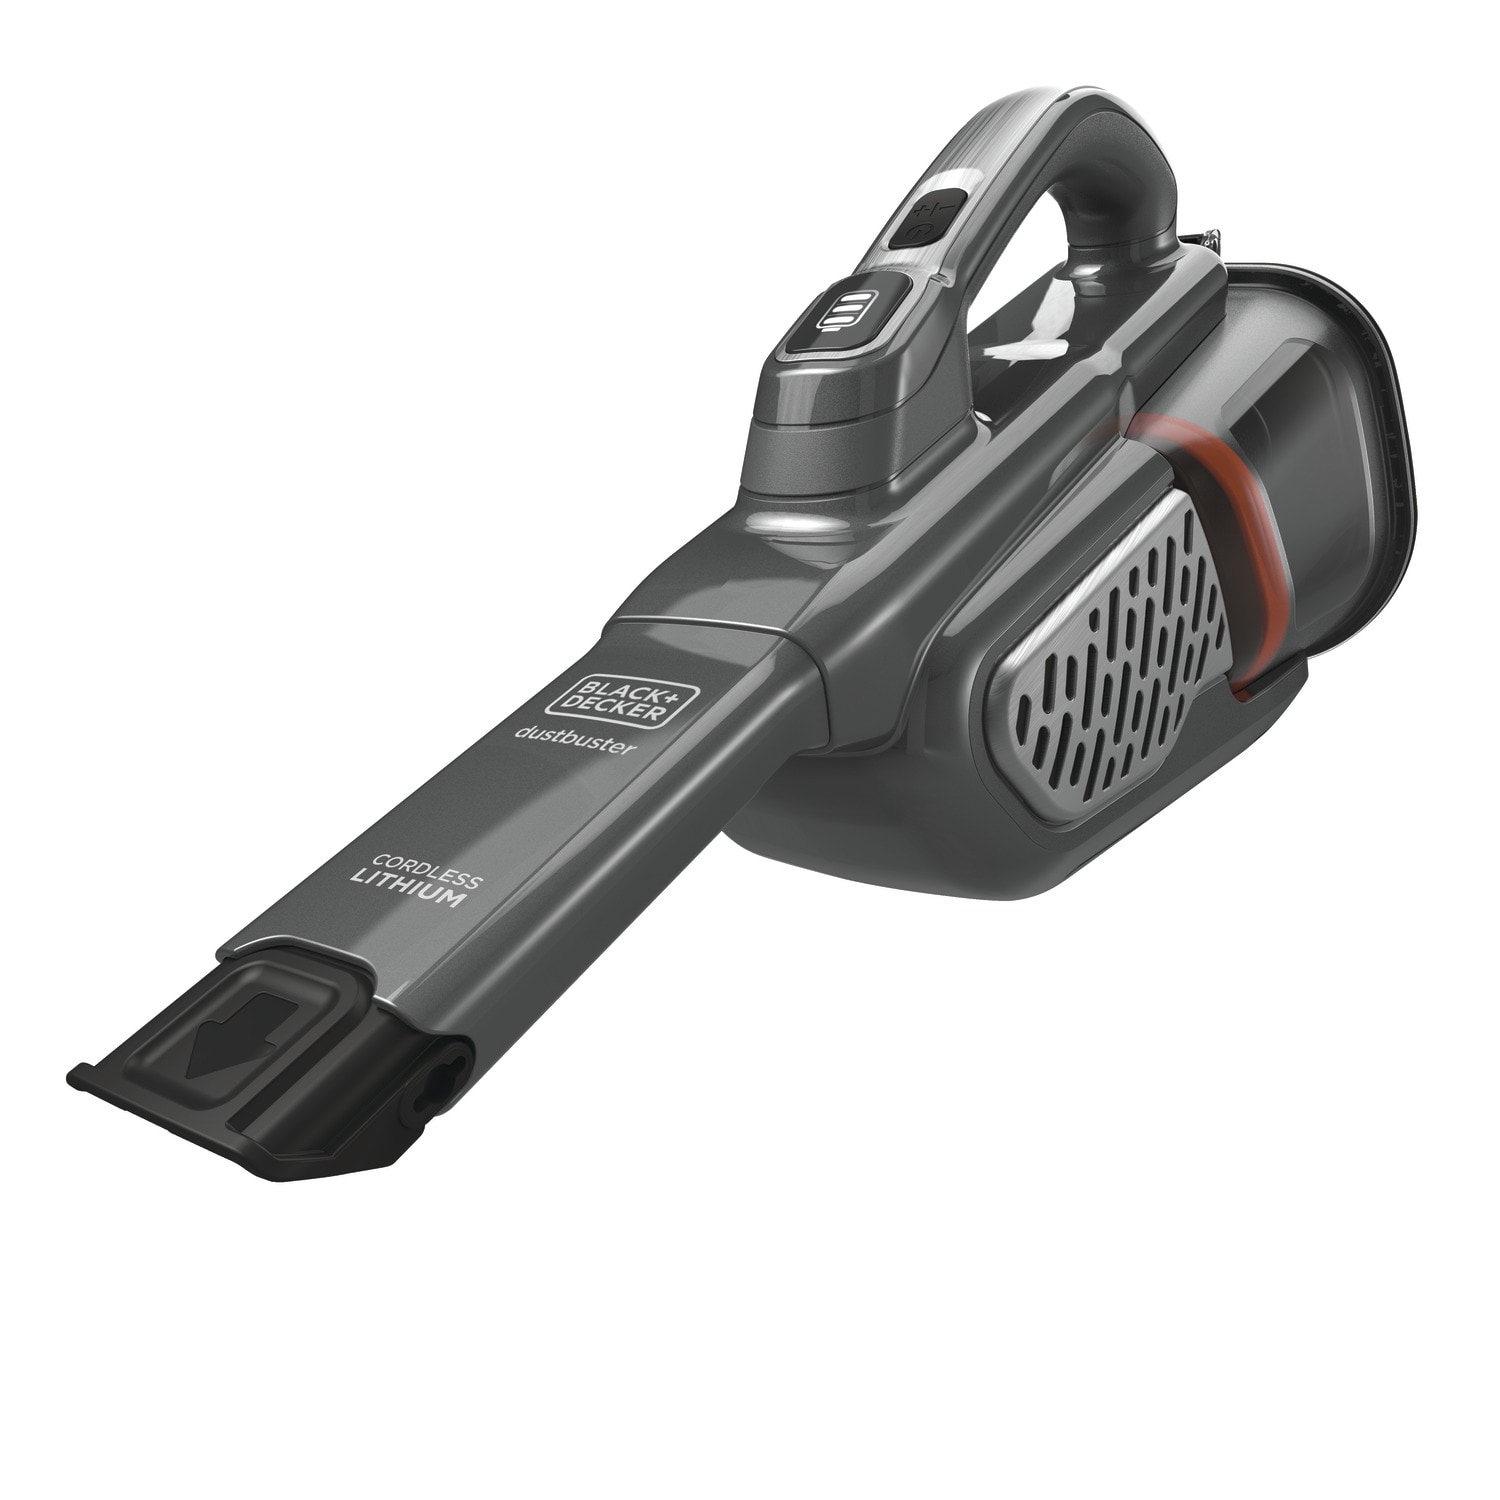 BLACK+DECKER dustbuster AdvancedClean+ 16-Volt Cordless Handheld Vacuum